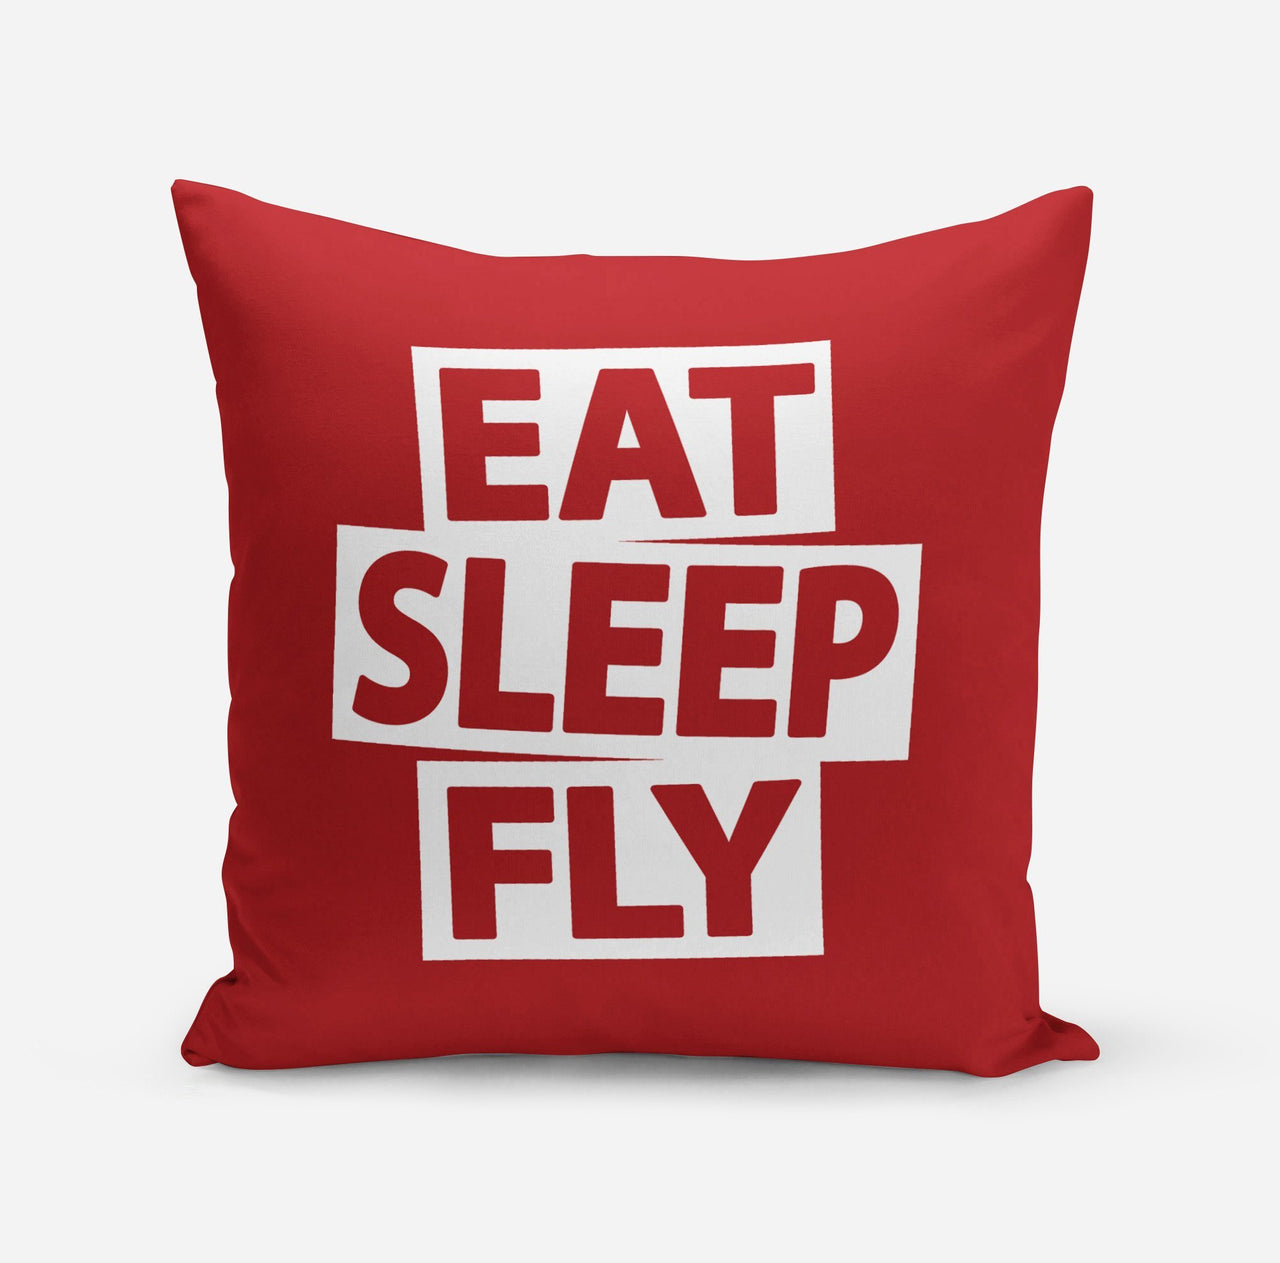 Eat Sleep Fly Pillows Pilot Eyes Store Red 55x55cm 